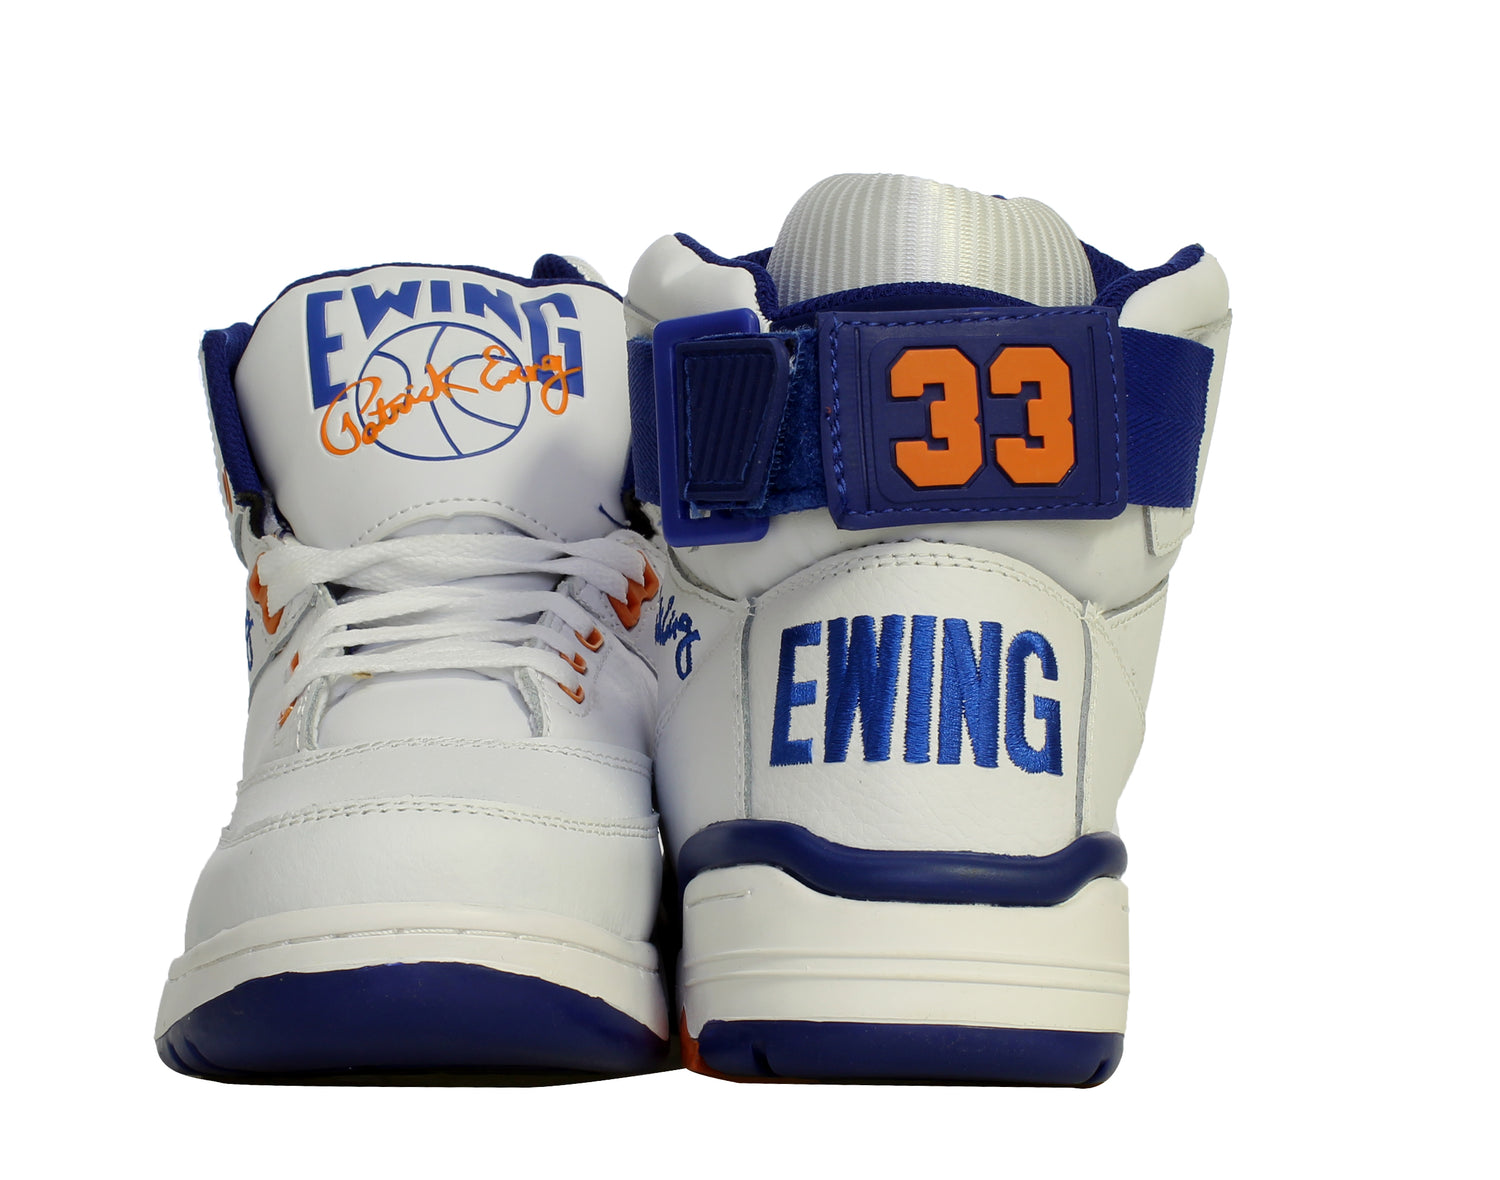 Ewing Athletics Ewing 33 Hi Home OG Men's Basketball Shoes